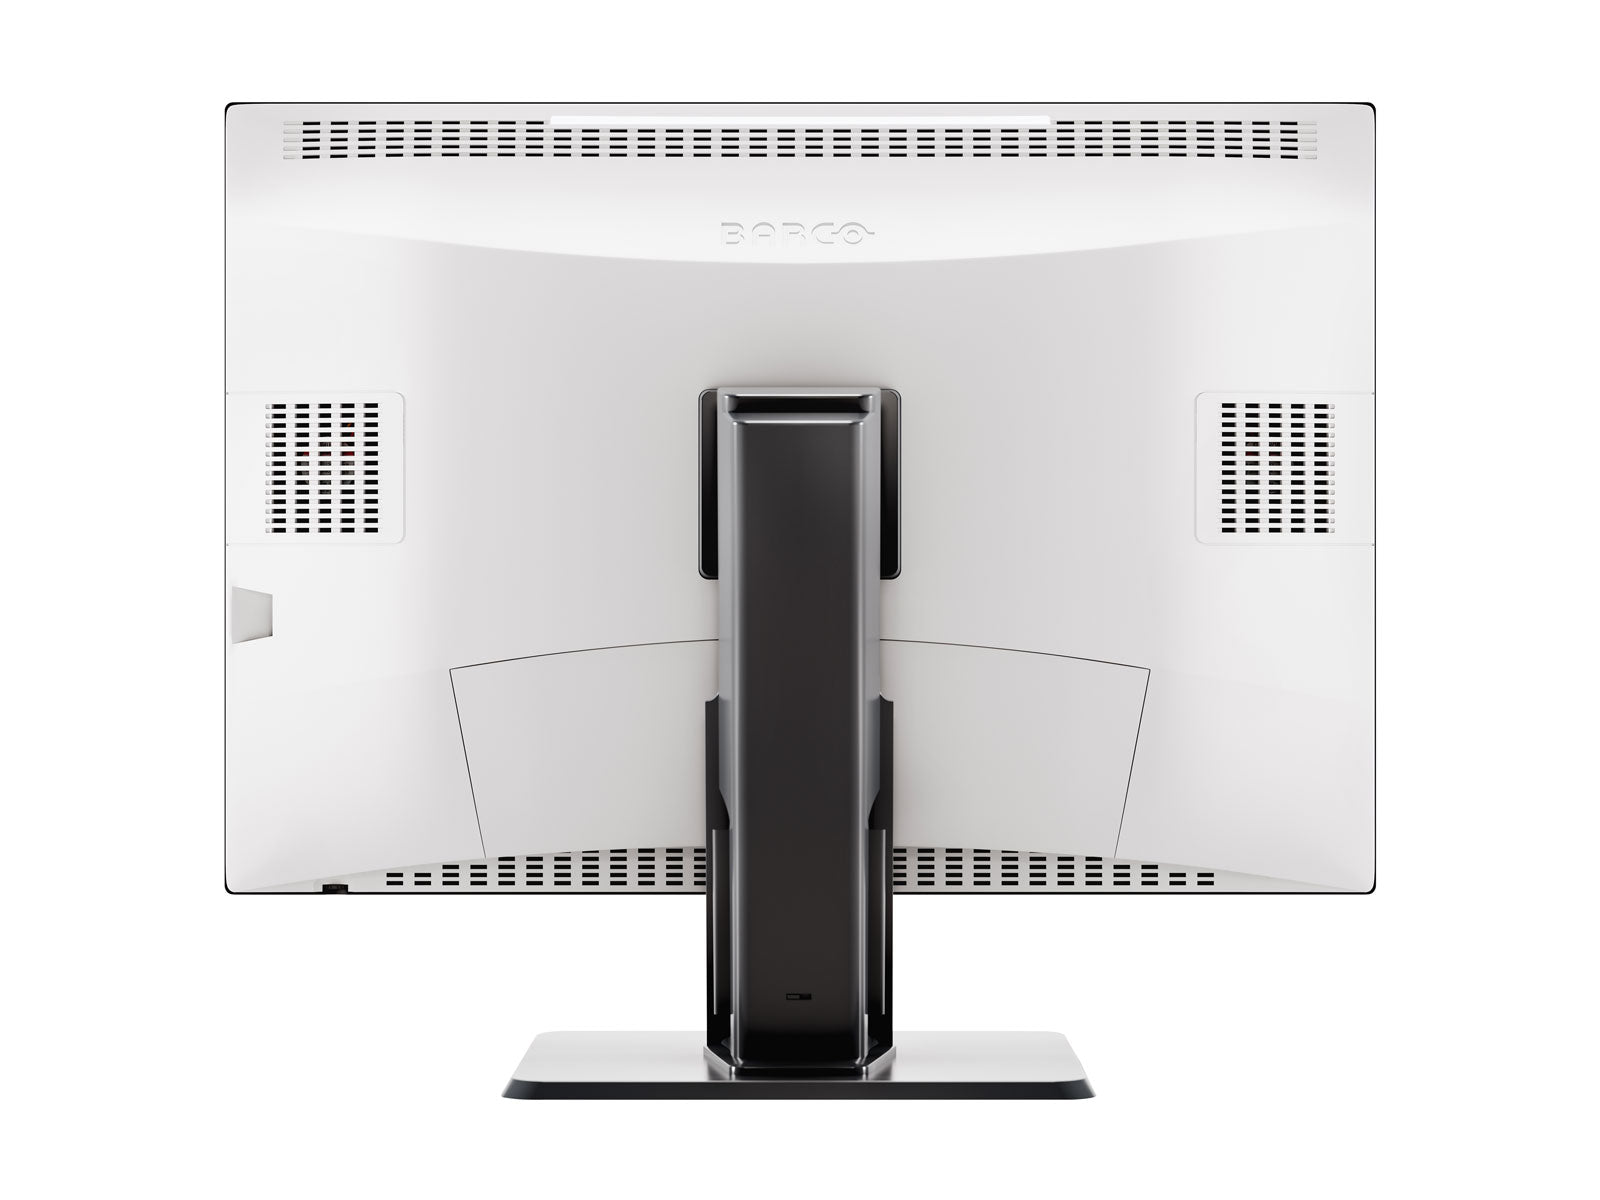 Barco Nio Fusion MDNC-12130 12MP 31" Color Tomosynthesis 3D-DBT Mammography Display Monitors.com 